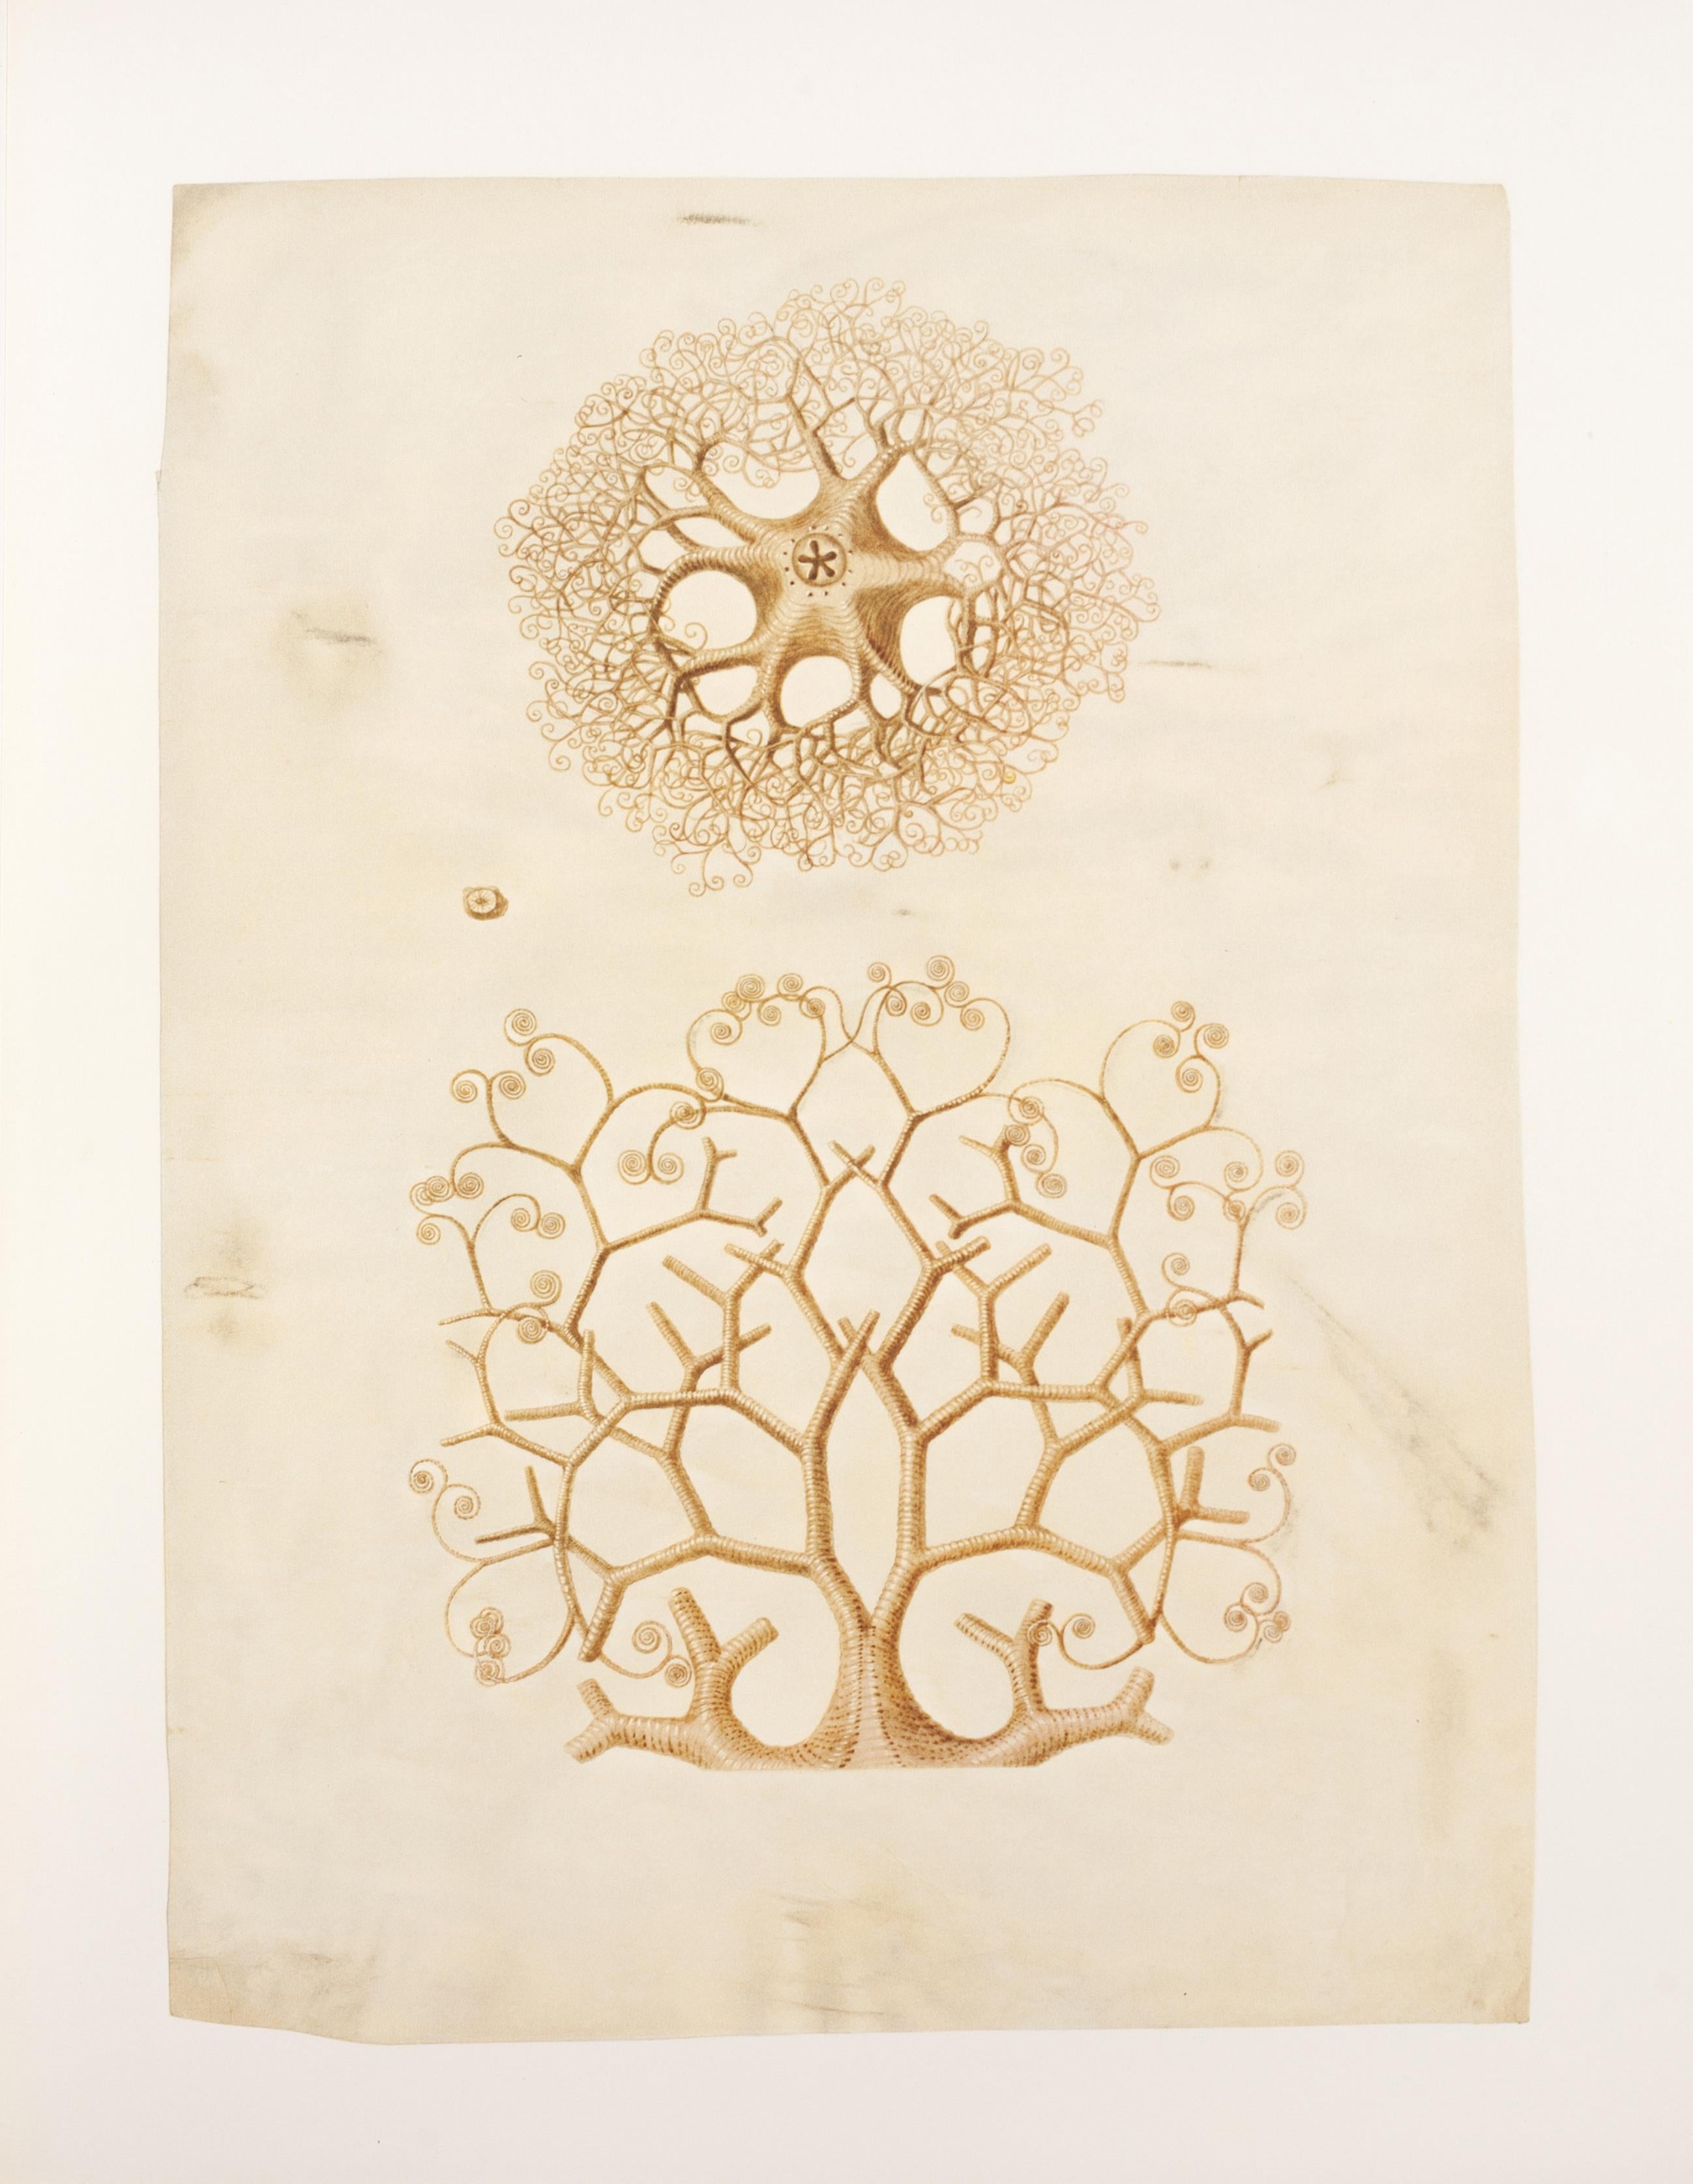 16. Branching star - Print by Maria Sybilla Merian